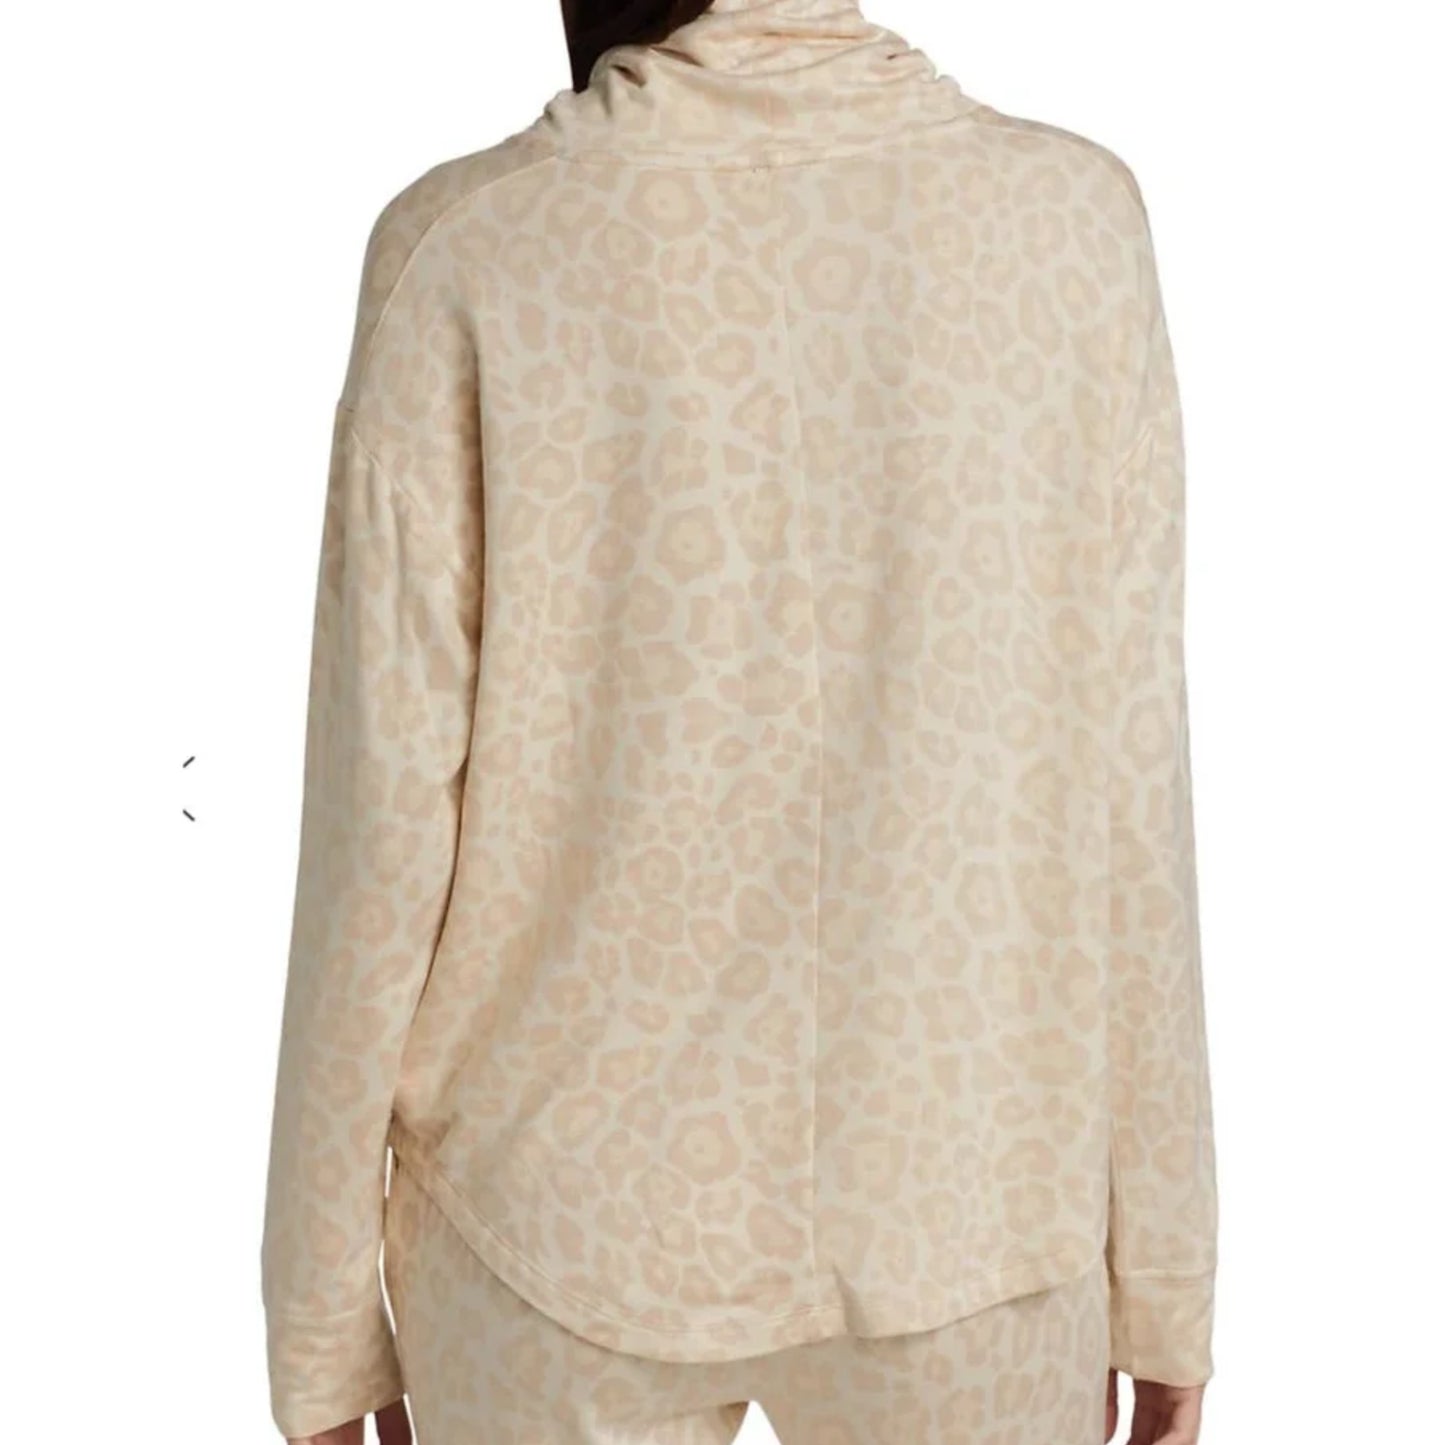 Splendid Women's Ultra Soft Leopard Print Cowl Neck Pullover Top Sweatshirt